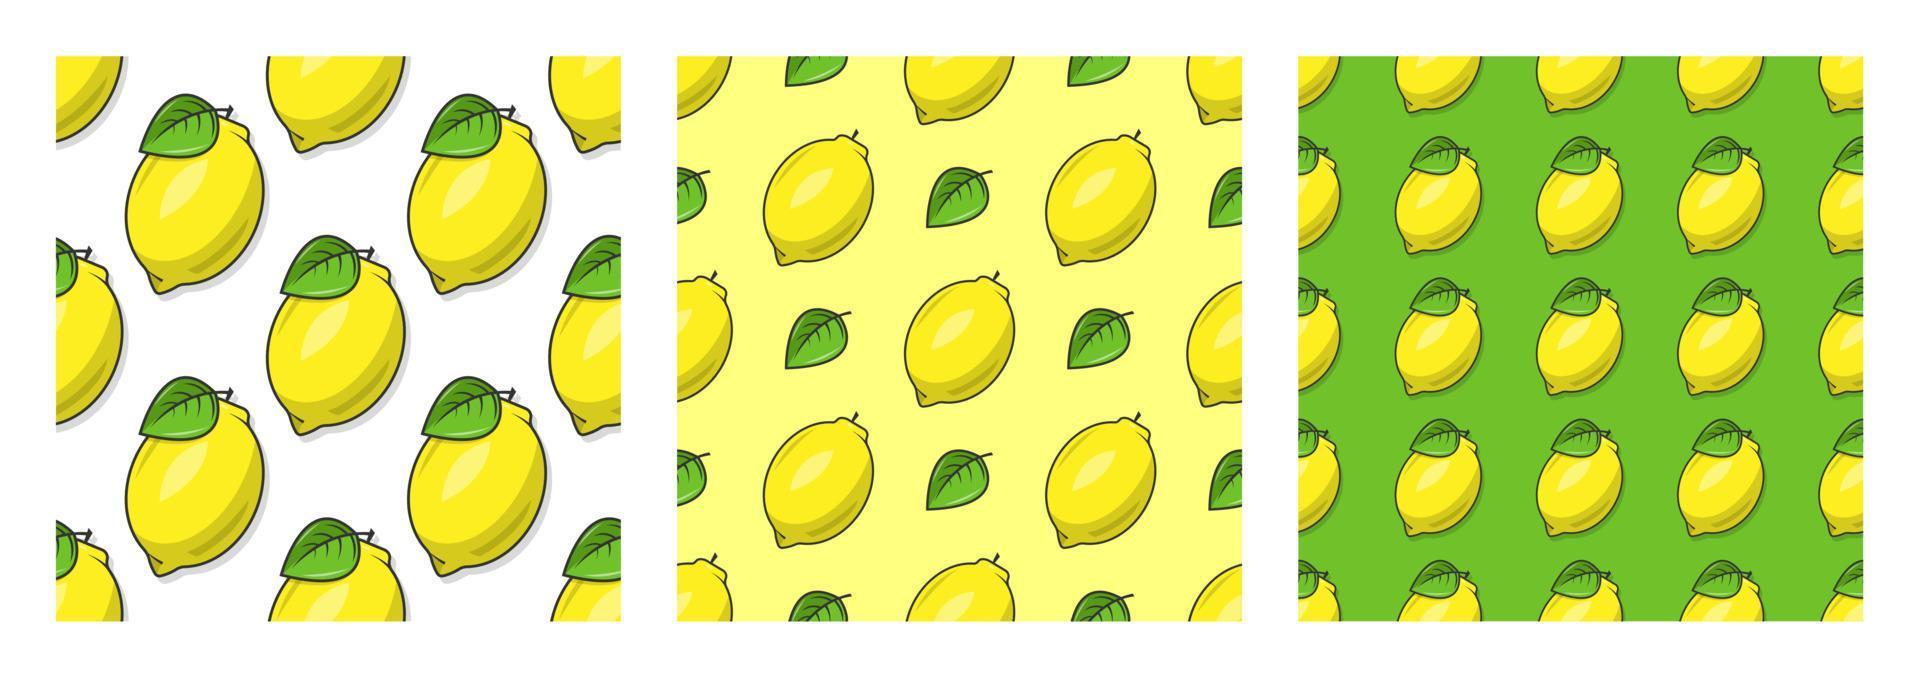 set di modelli senza cuciture di succosi limoni gialli maturi con foglie. stampa per tessuti, cartoline, ecc. vettore